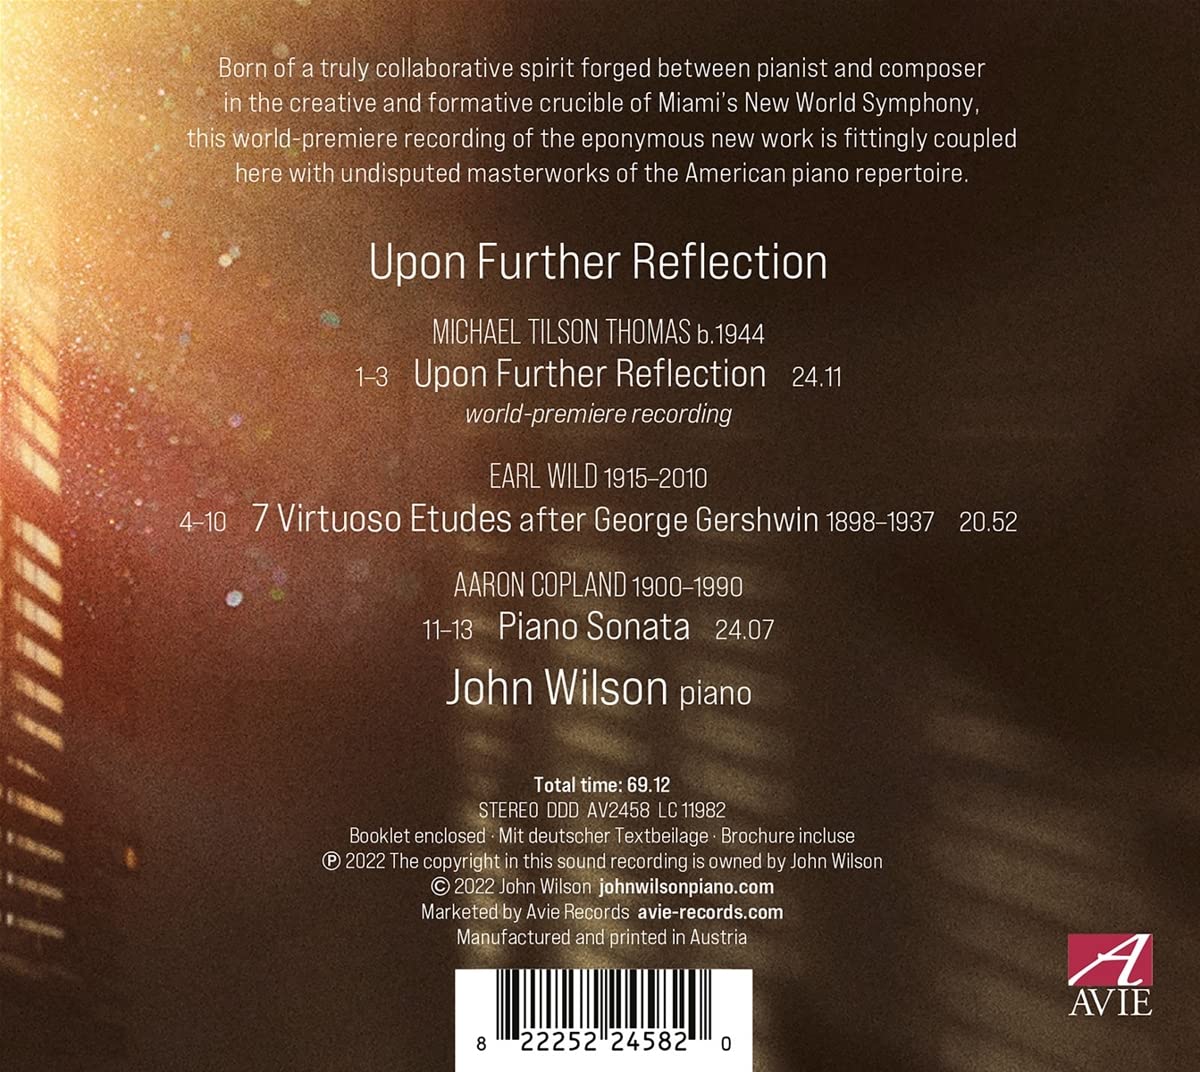 John Wilson 틸슨 토머스: '깊어지는 명상' / 와일드: 거슈윈 노래에 의한 에튀드 / 코플런드: 피아노 소나타 (Upon Further Reflection)